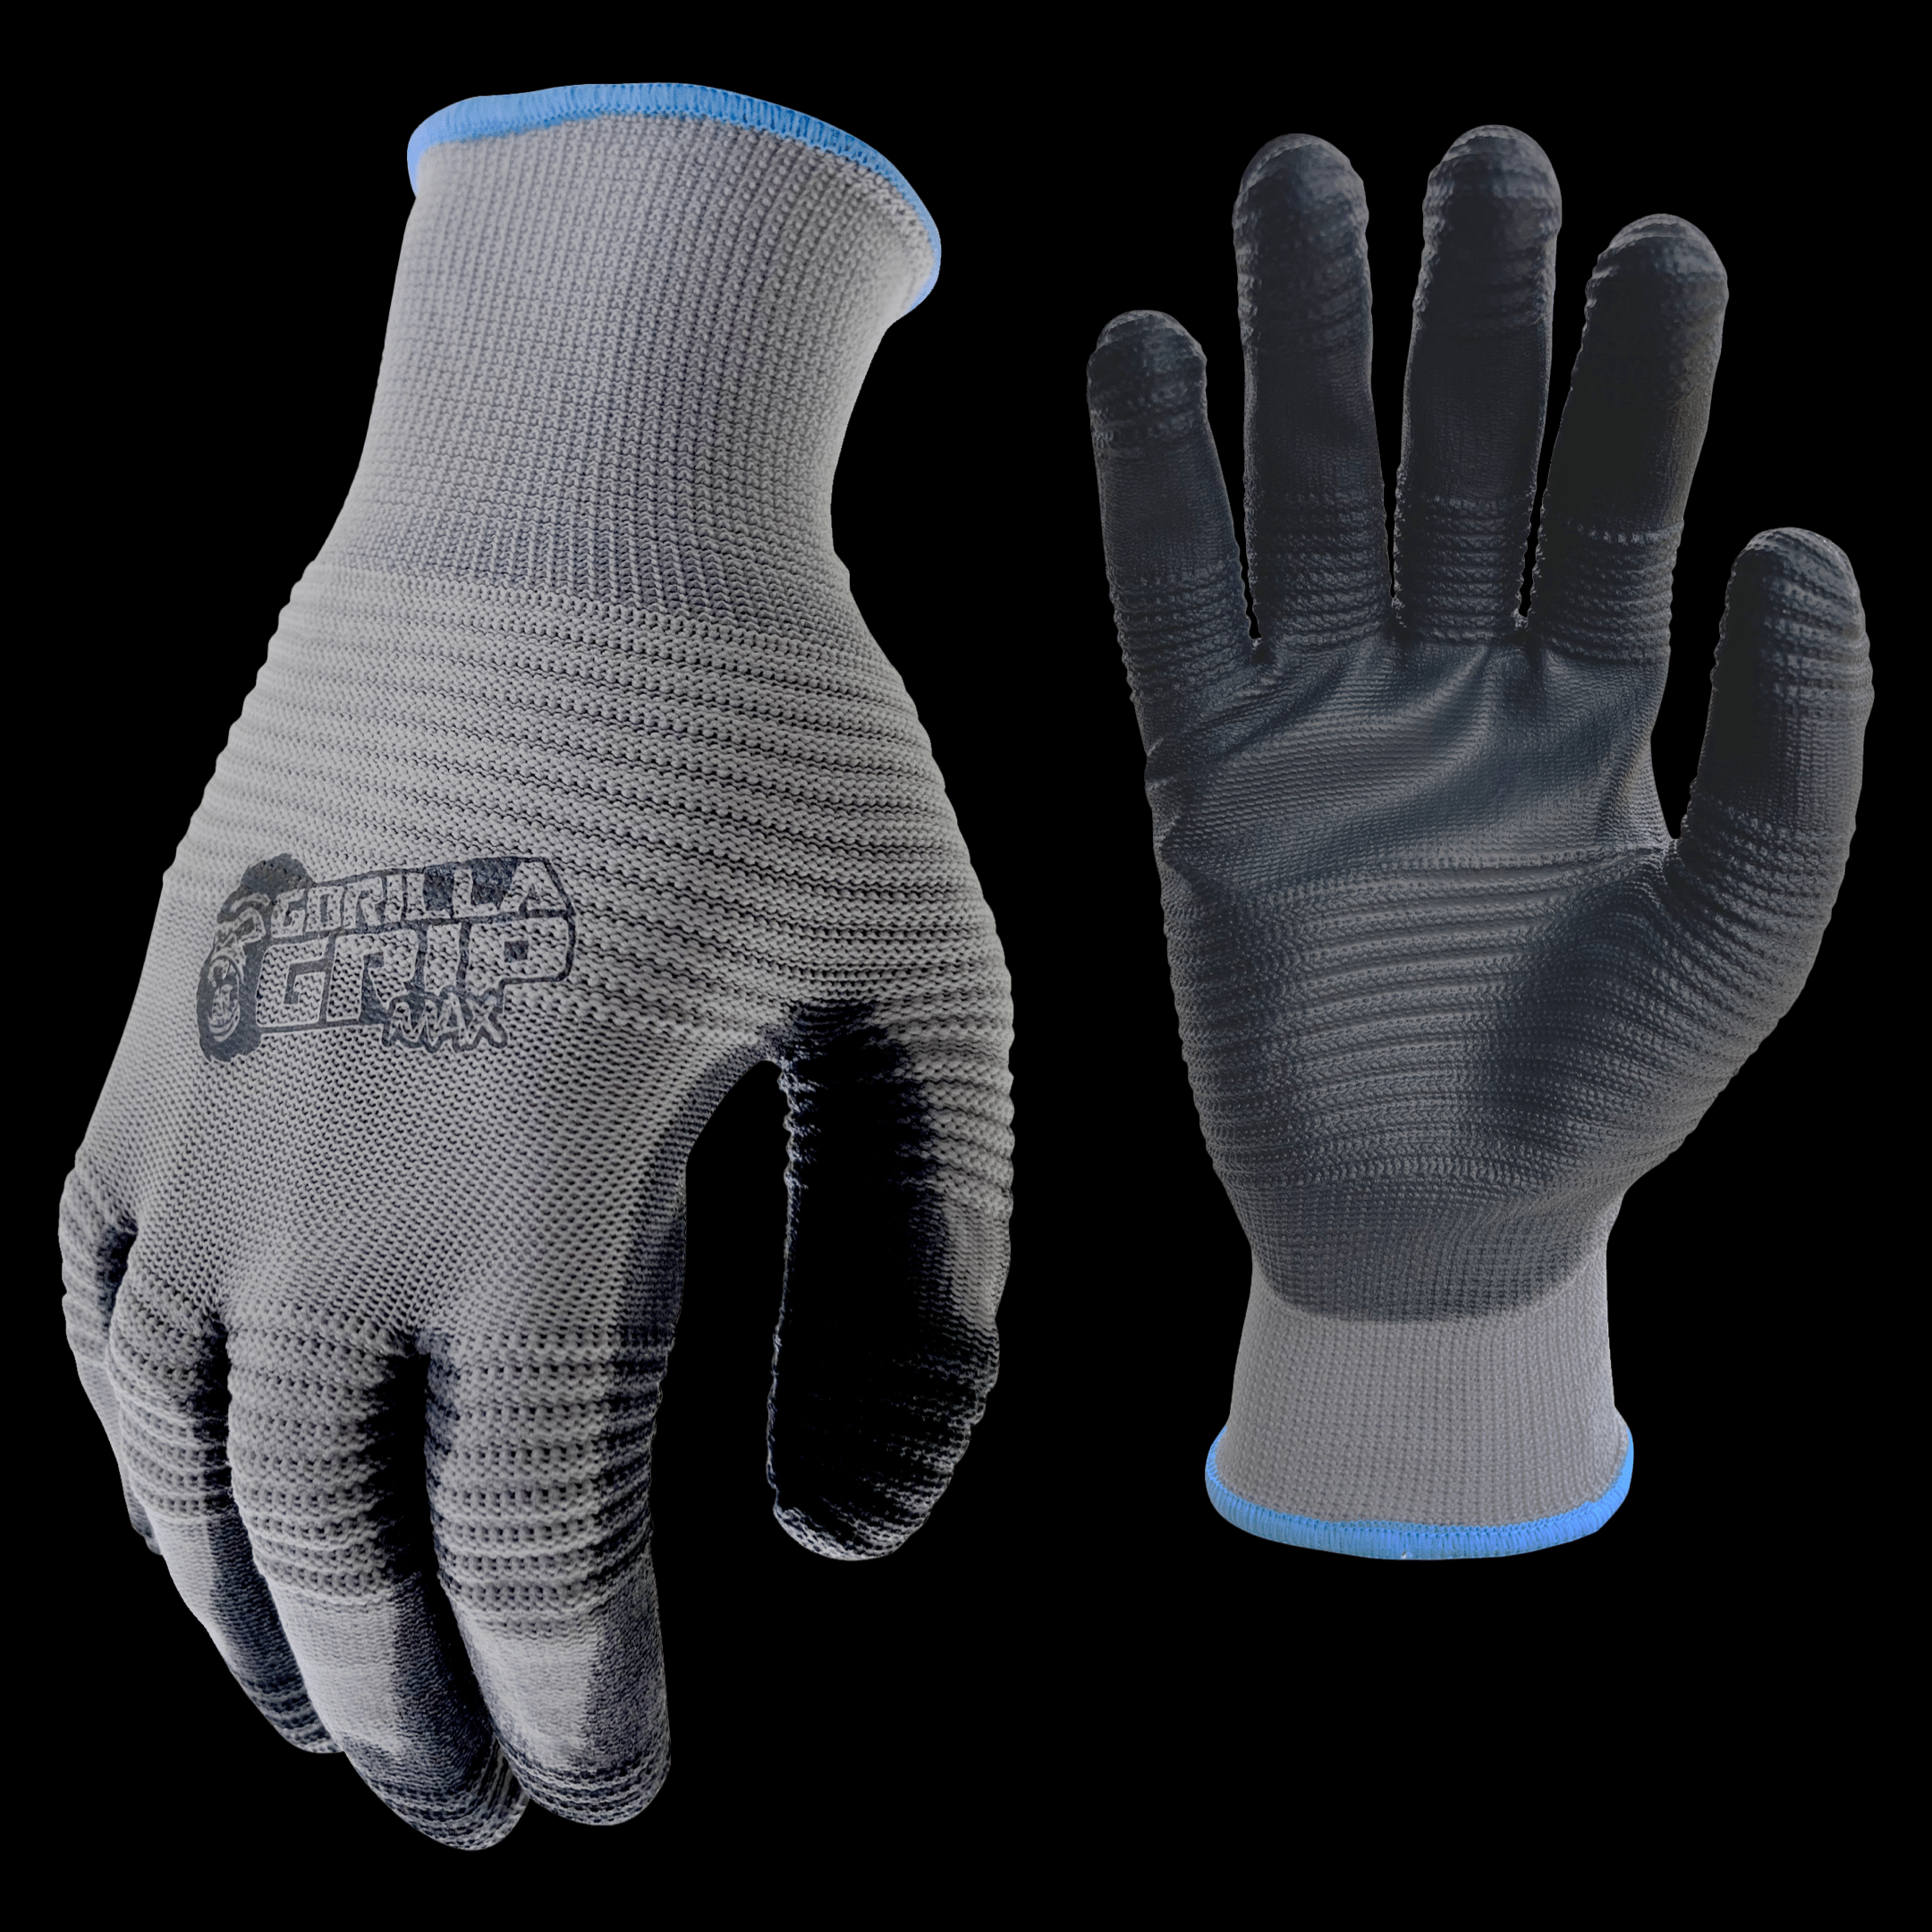 72 pieces Gloves Max Grip All Purpose Xlarge Gorilla Grip - Working Gloves  - at 